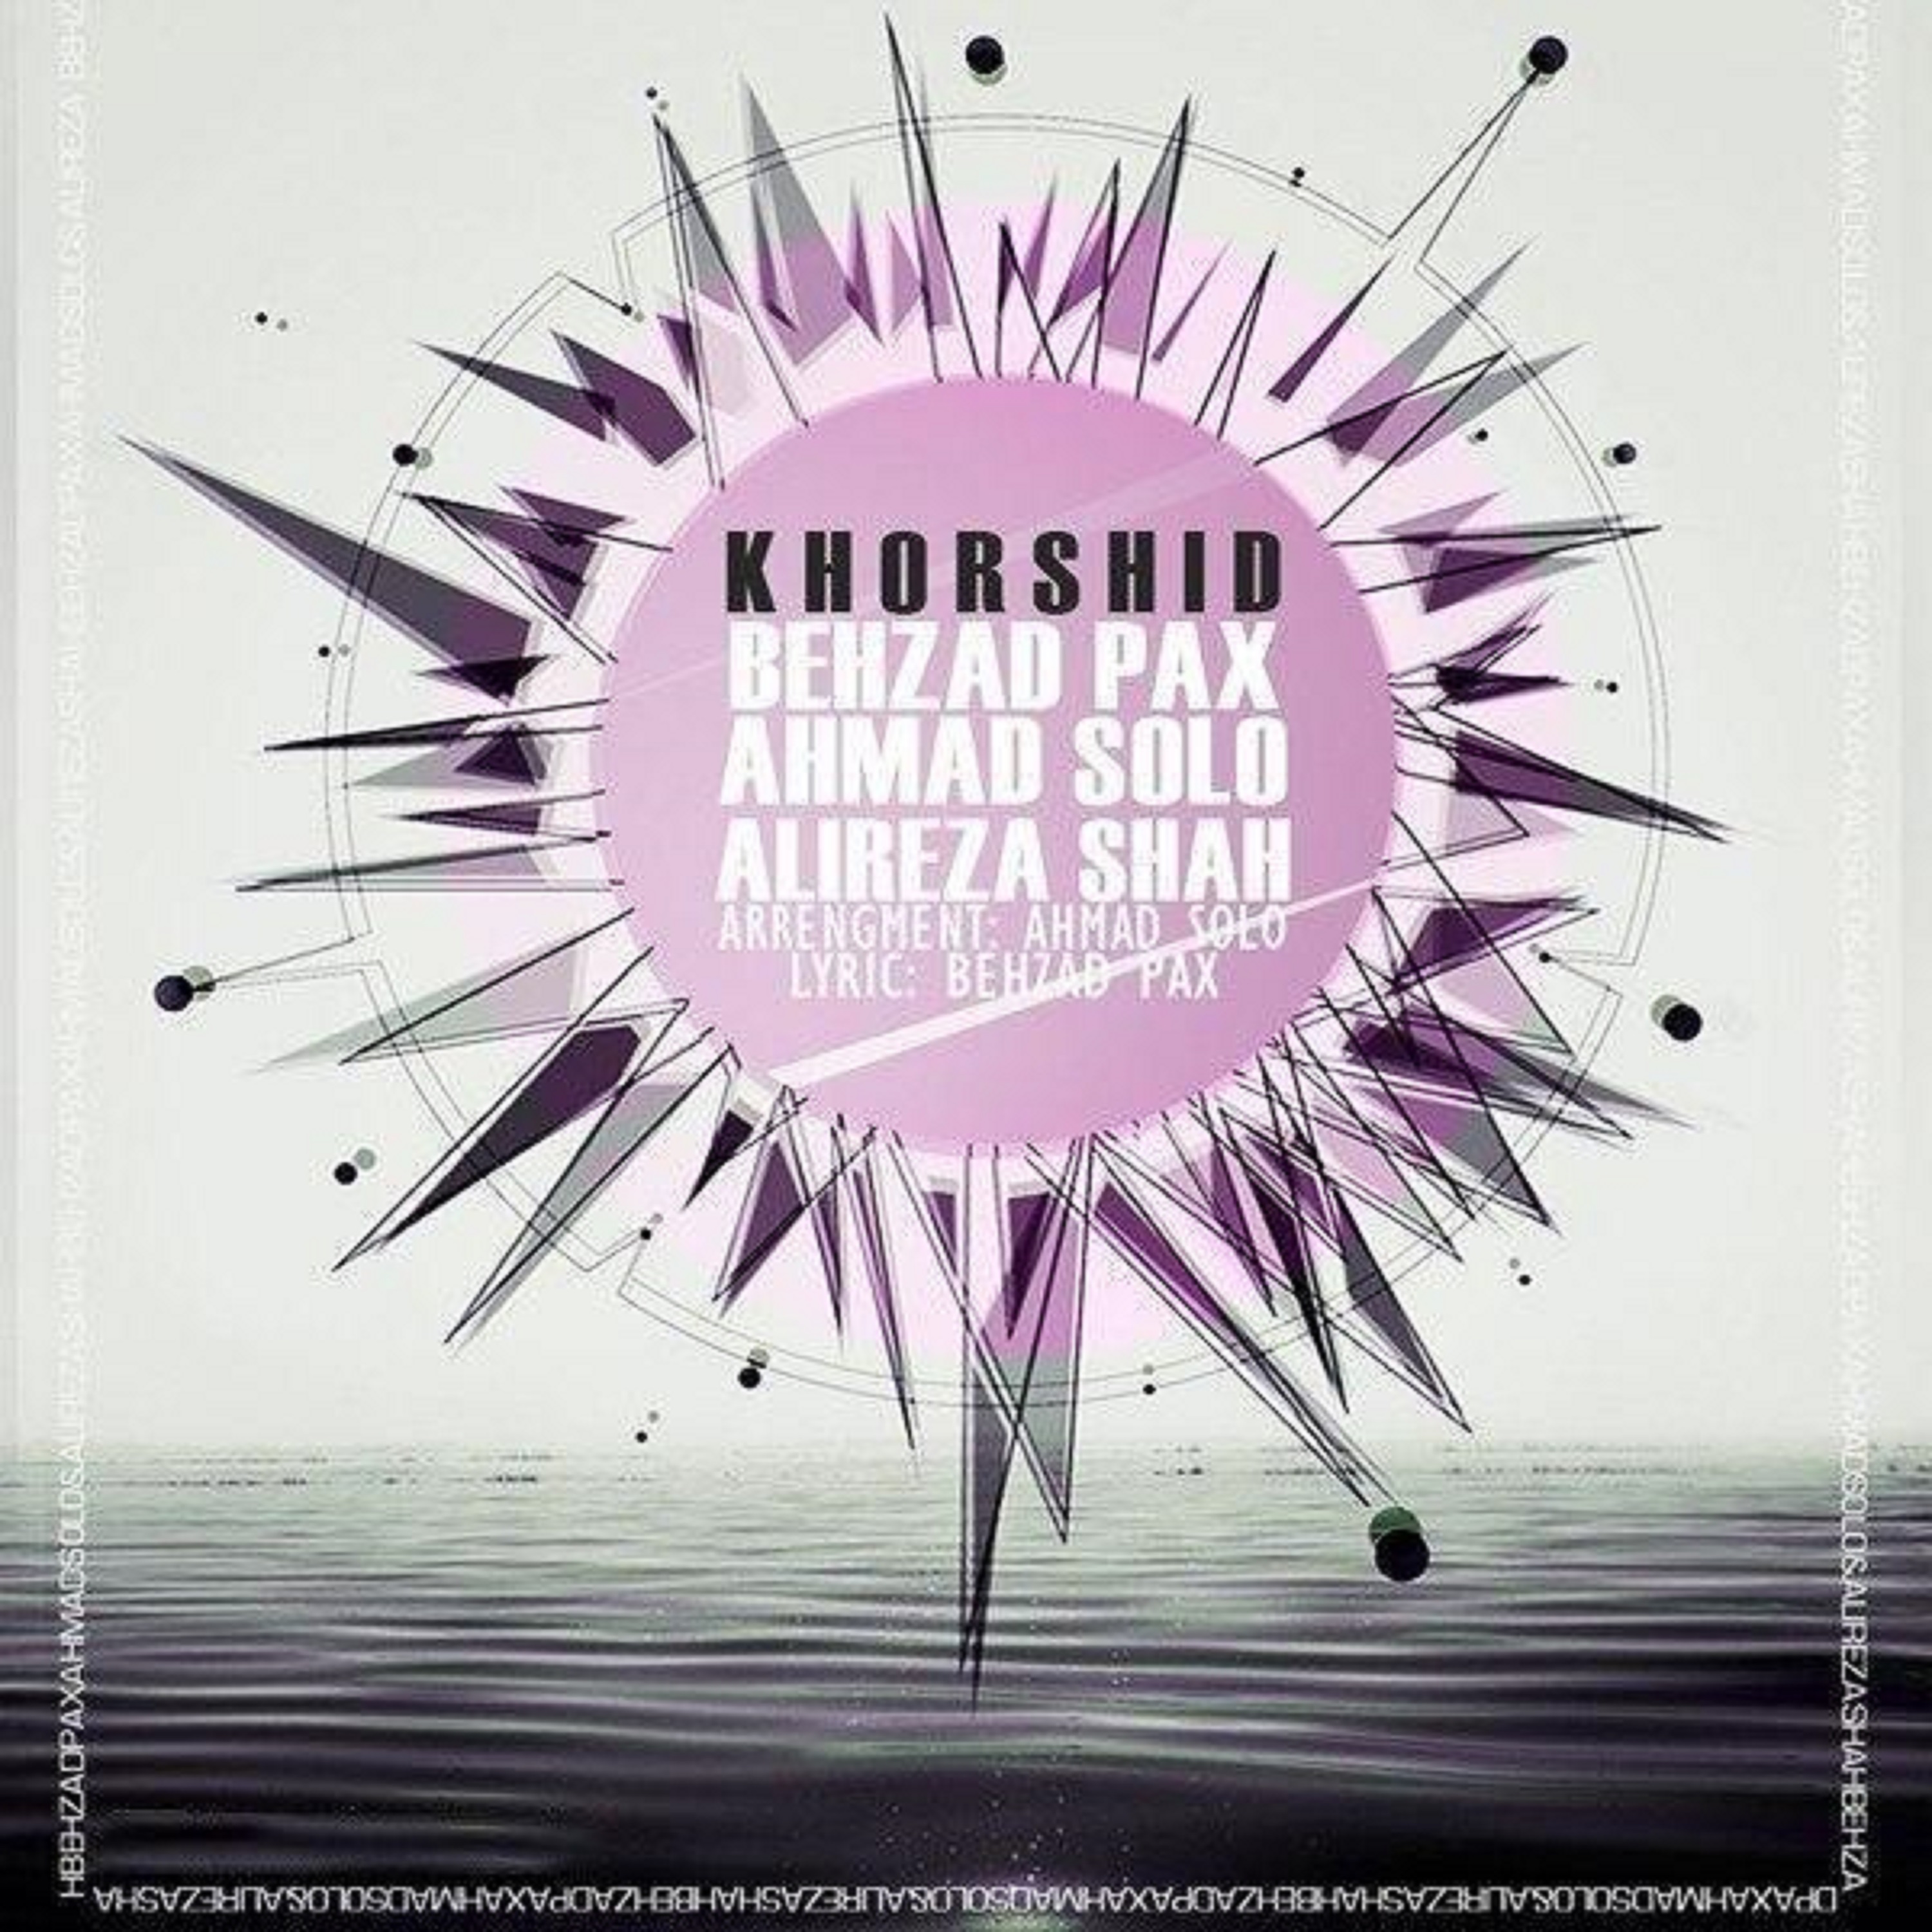  دانلود آهنگ جدید احمد سلو - خورشید | Download New Music By Ahmad Solo - Khorshid (feat. Behzad Pax)